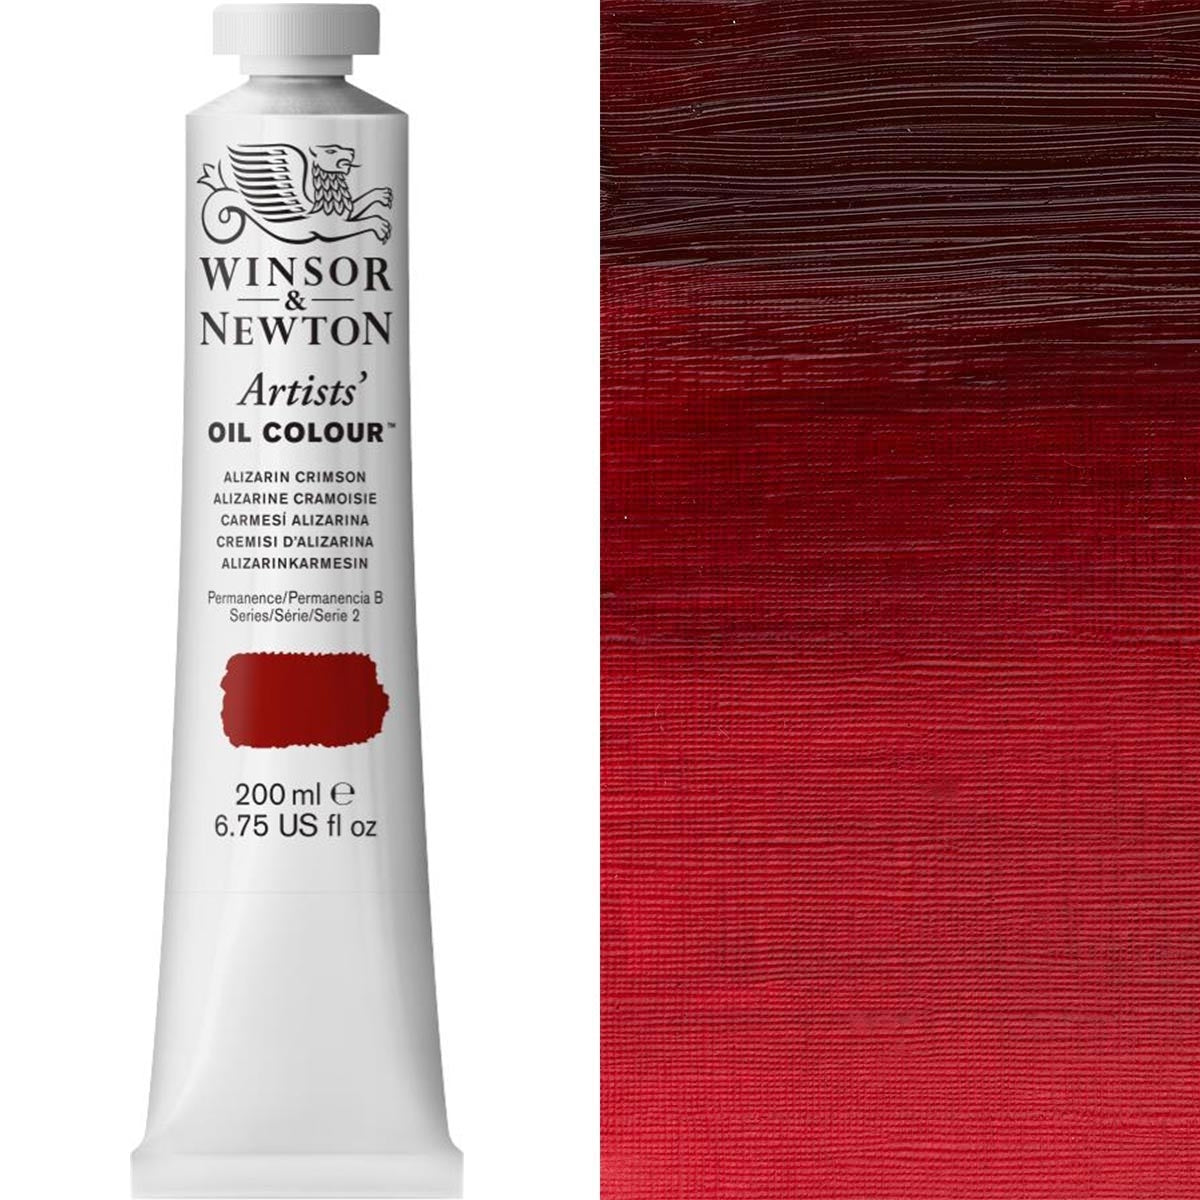 Winsor and Newton - Artists' Oil Colour - 200ml - Alizarin Crimson